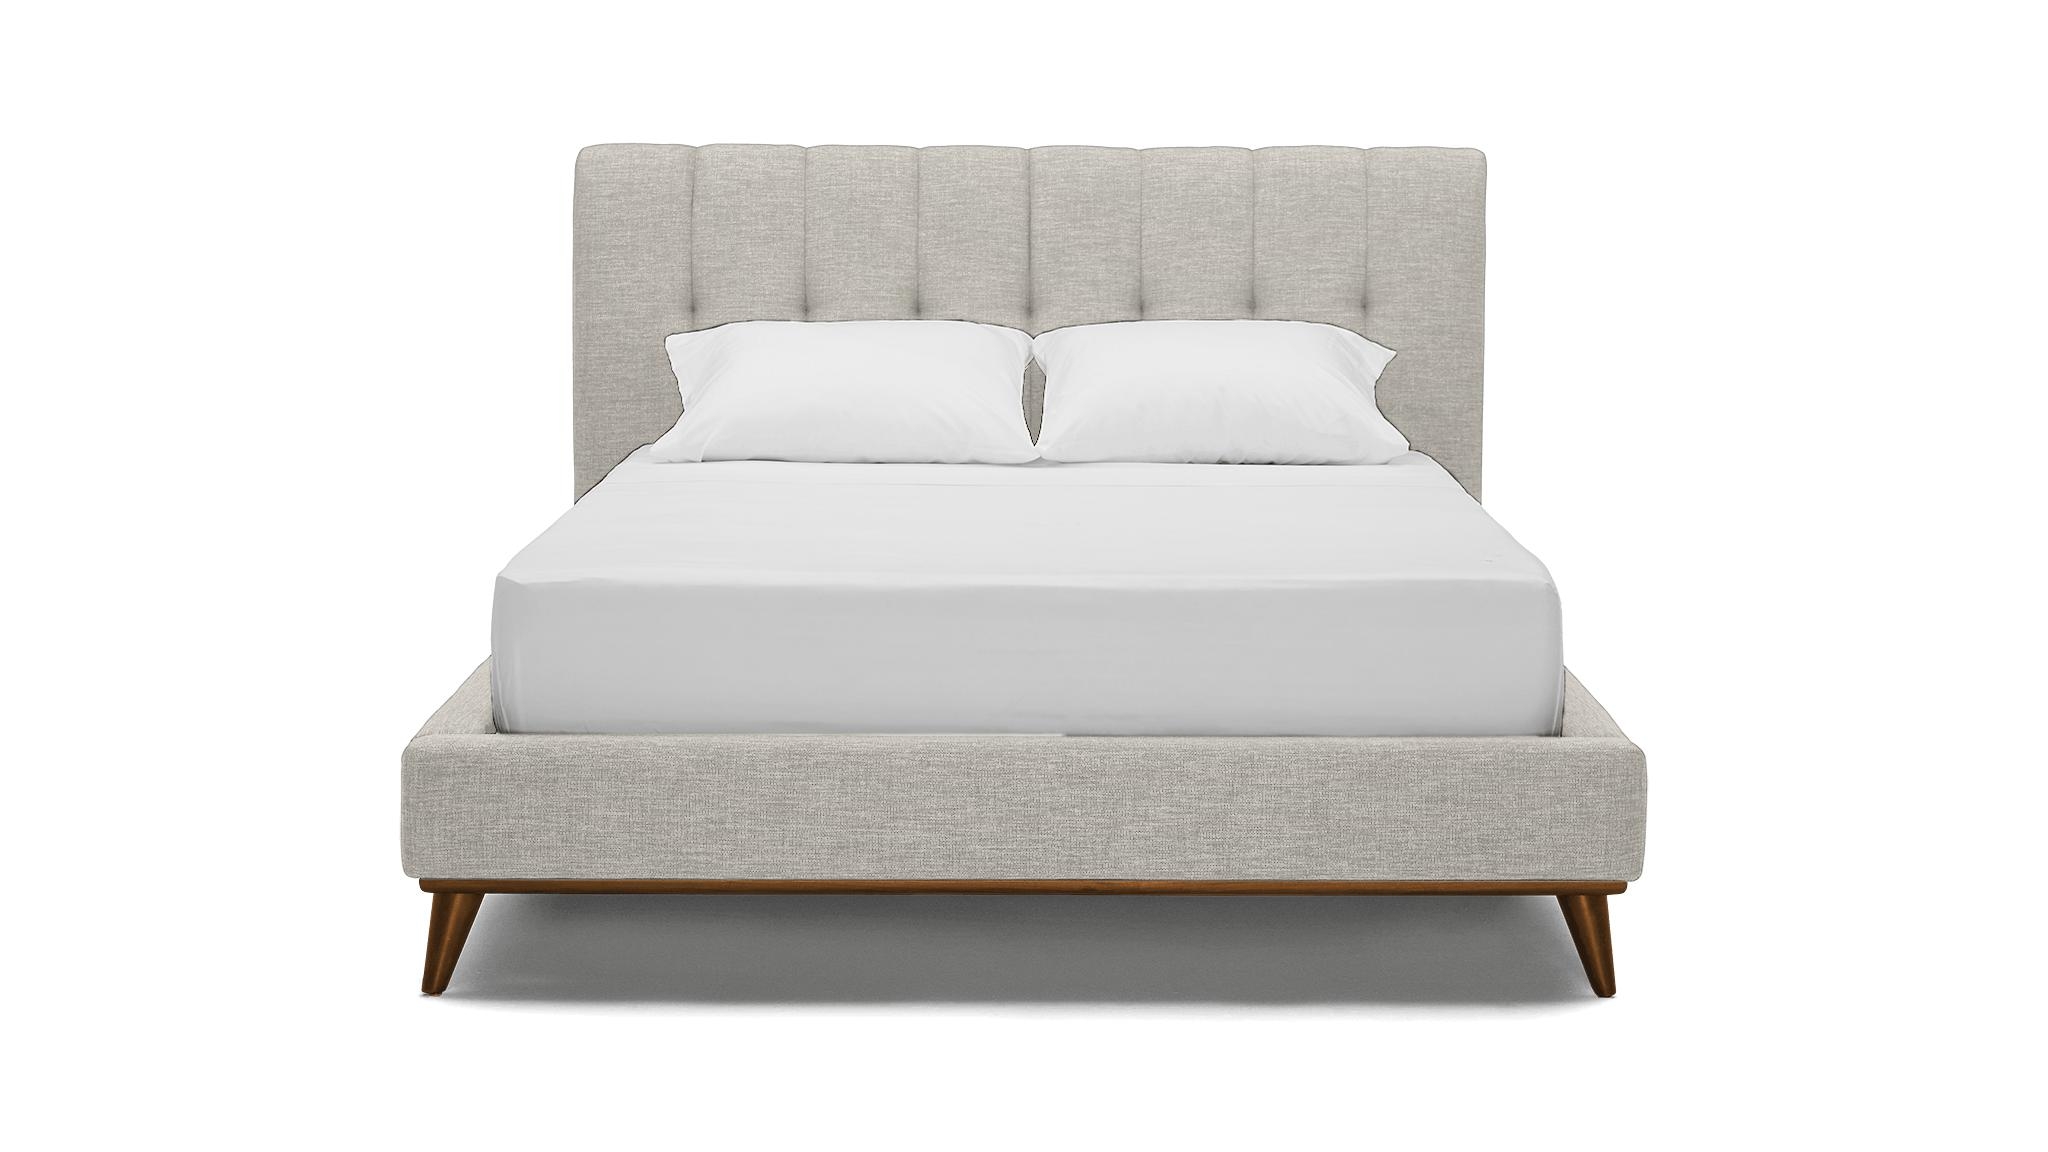 Gray Hughes Mid Century Modern Bed - Bloke Cotton - Mocha - Queen - Image 0